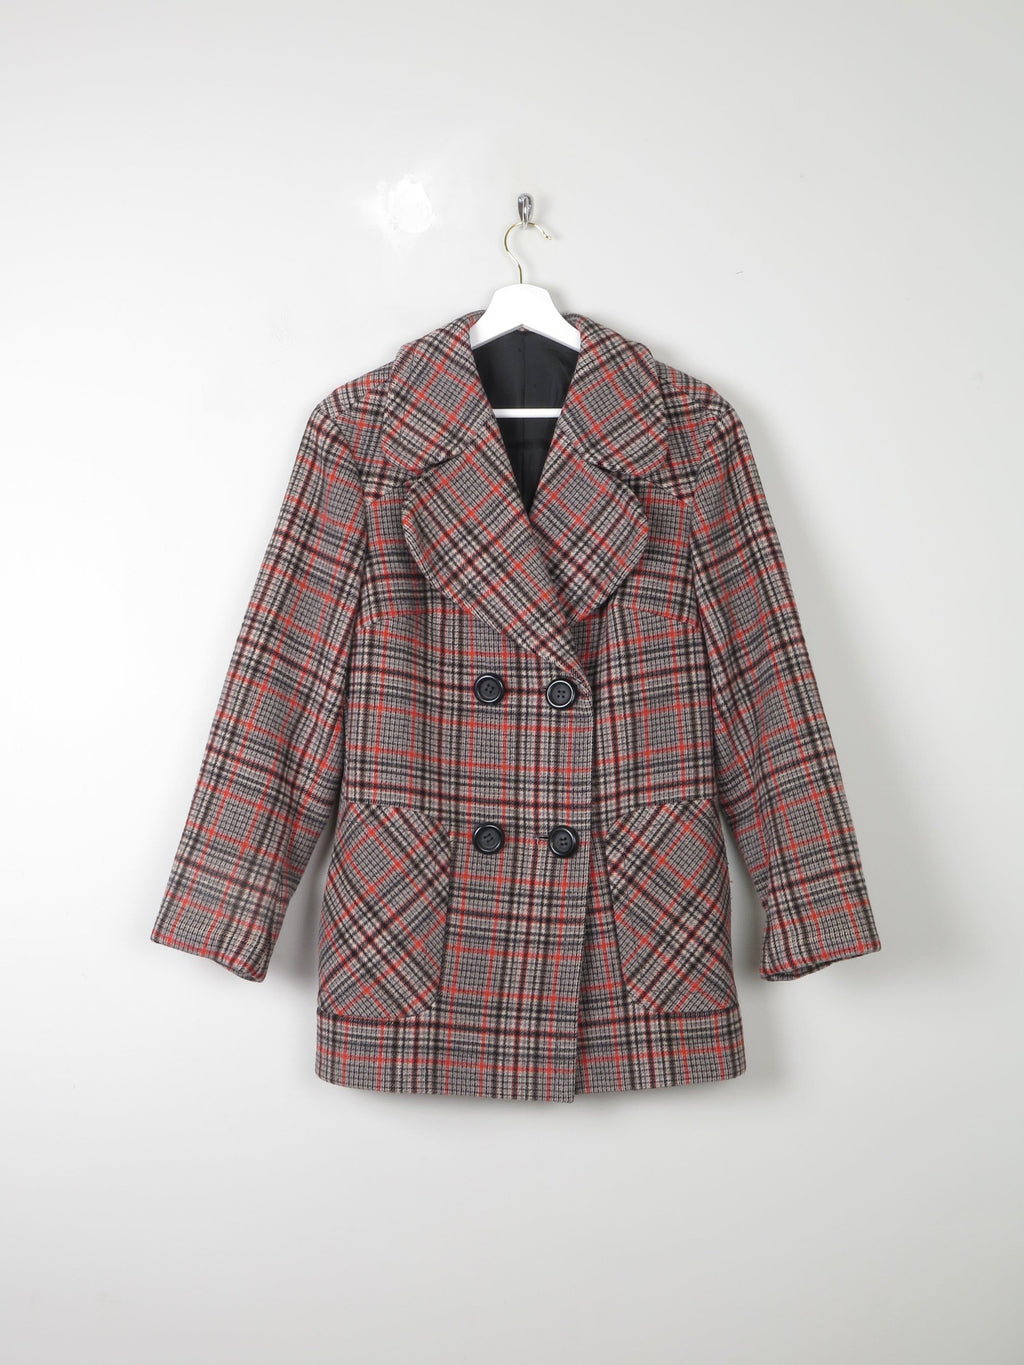 Women's Vintage 1970s Black/Grey/Red Check Short Coat M - The Harlequin